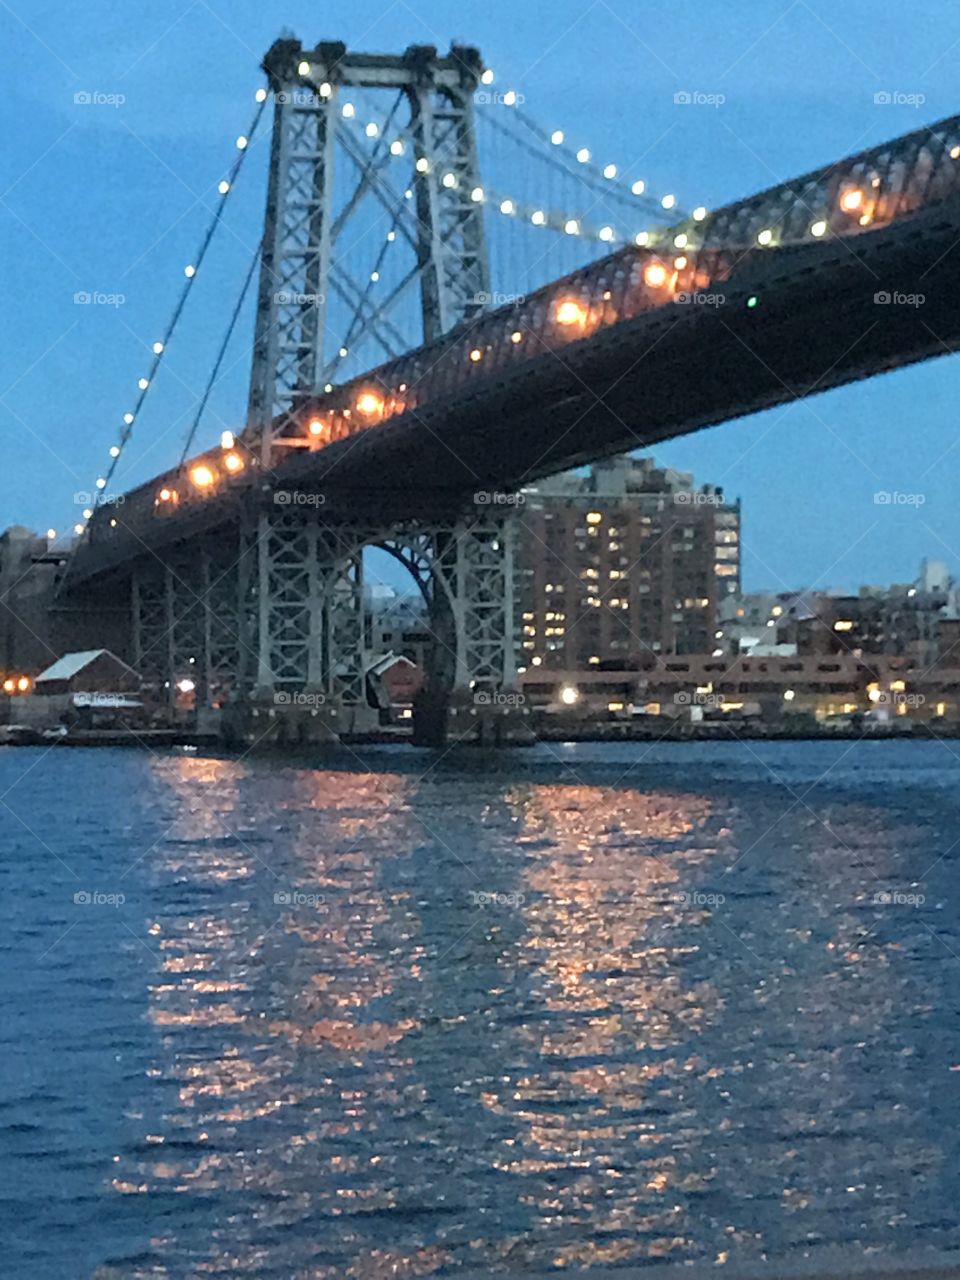 Williamsburg Bridge NYC